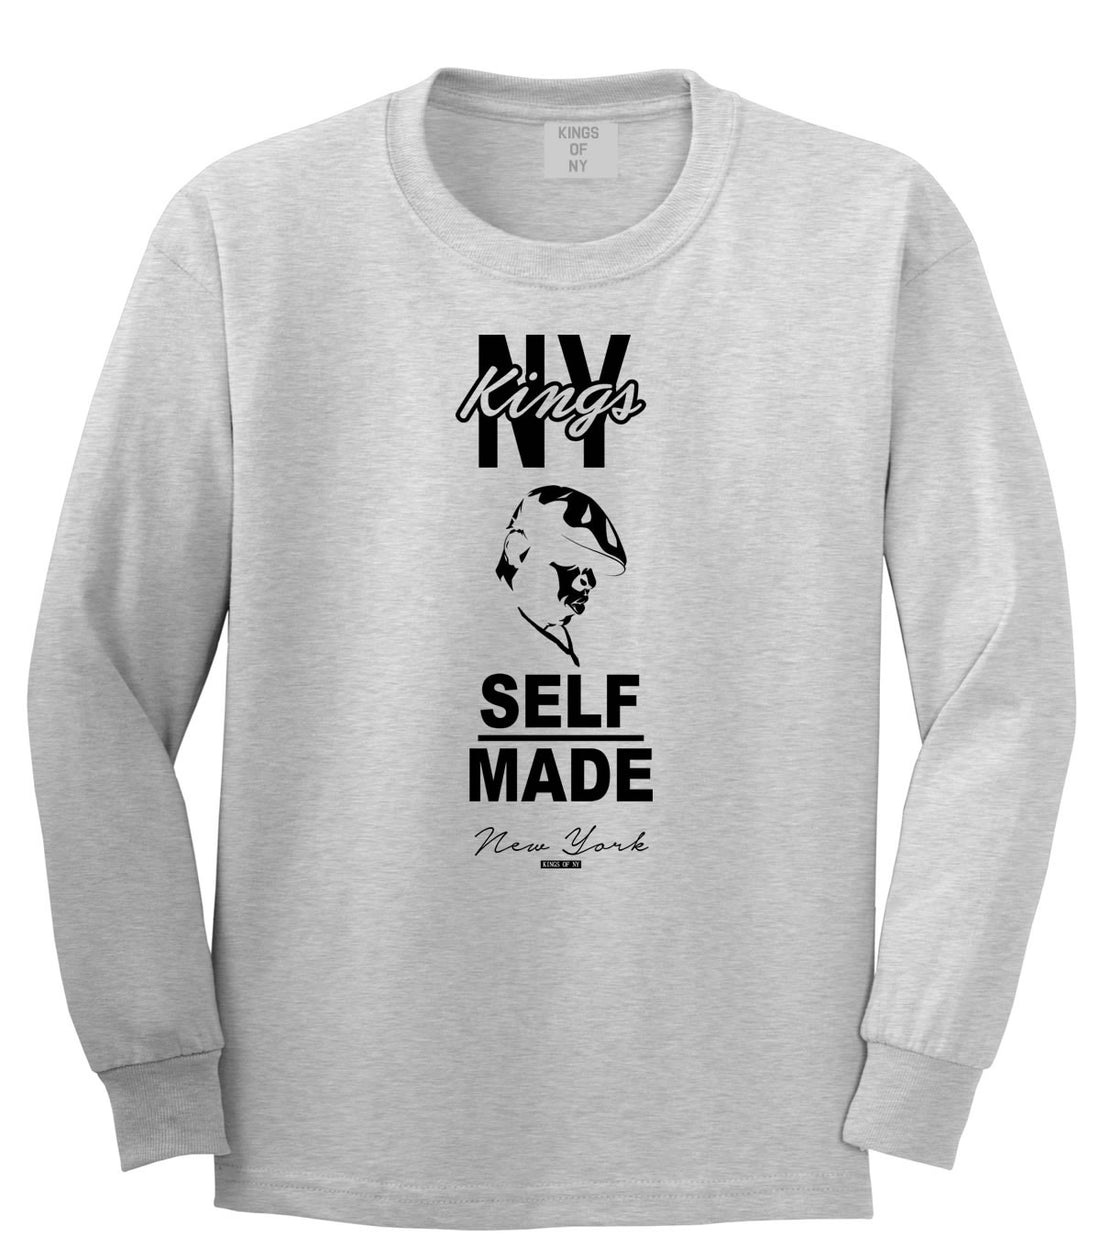 NY Kings Self Made Biggie Long Sleeve T-Shirt in Grey By Kings Of NY